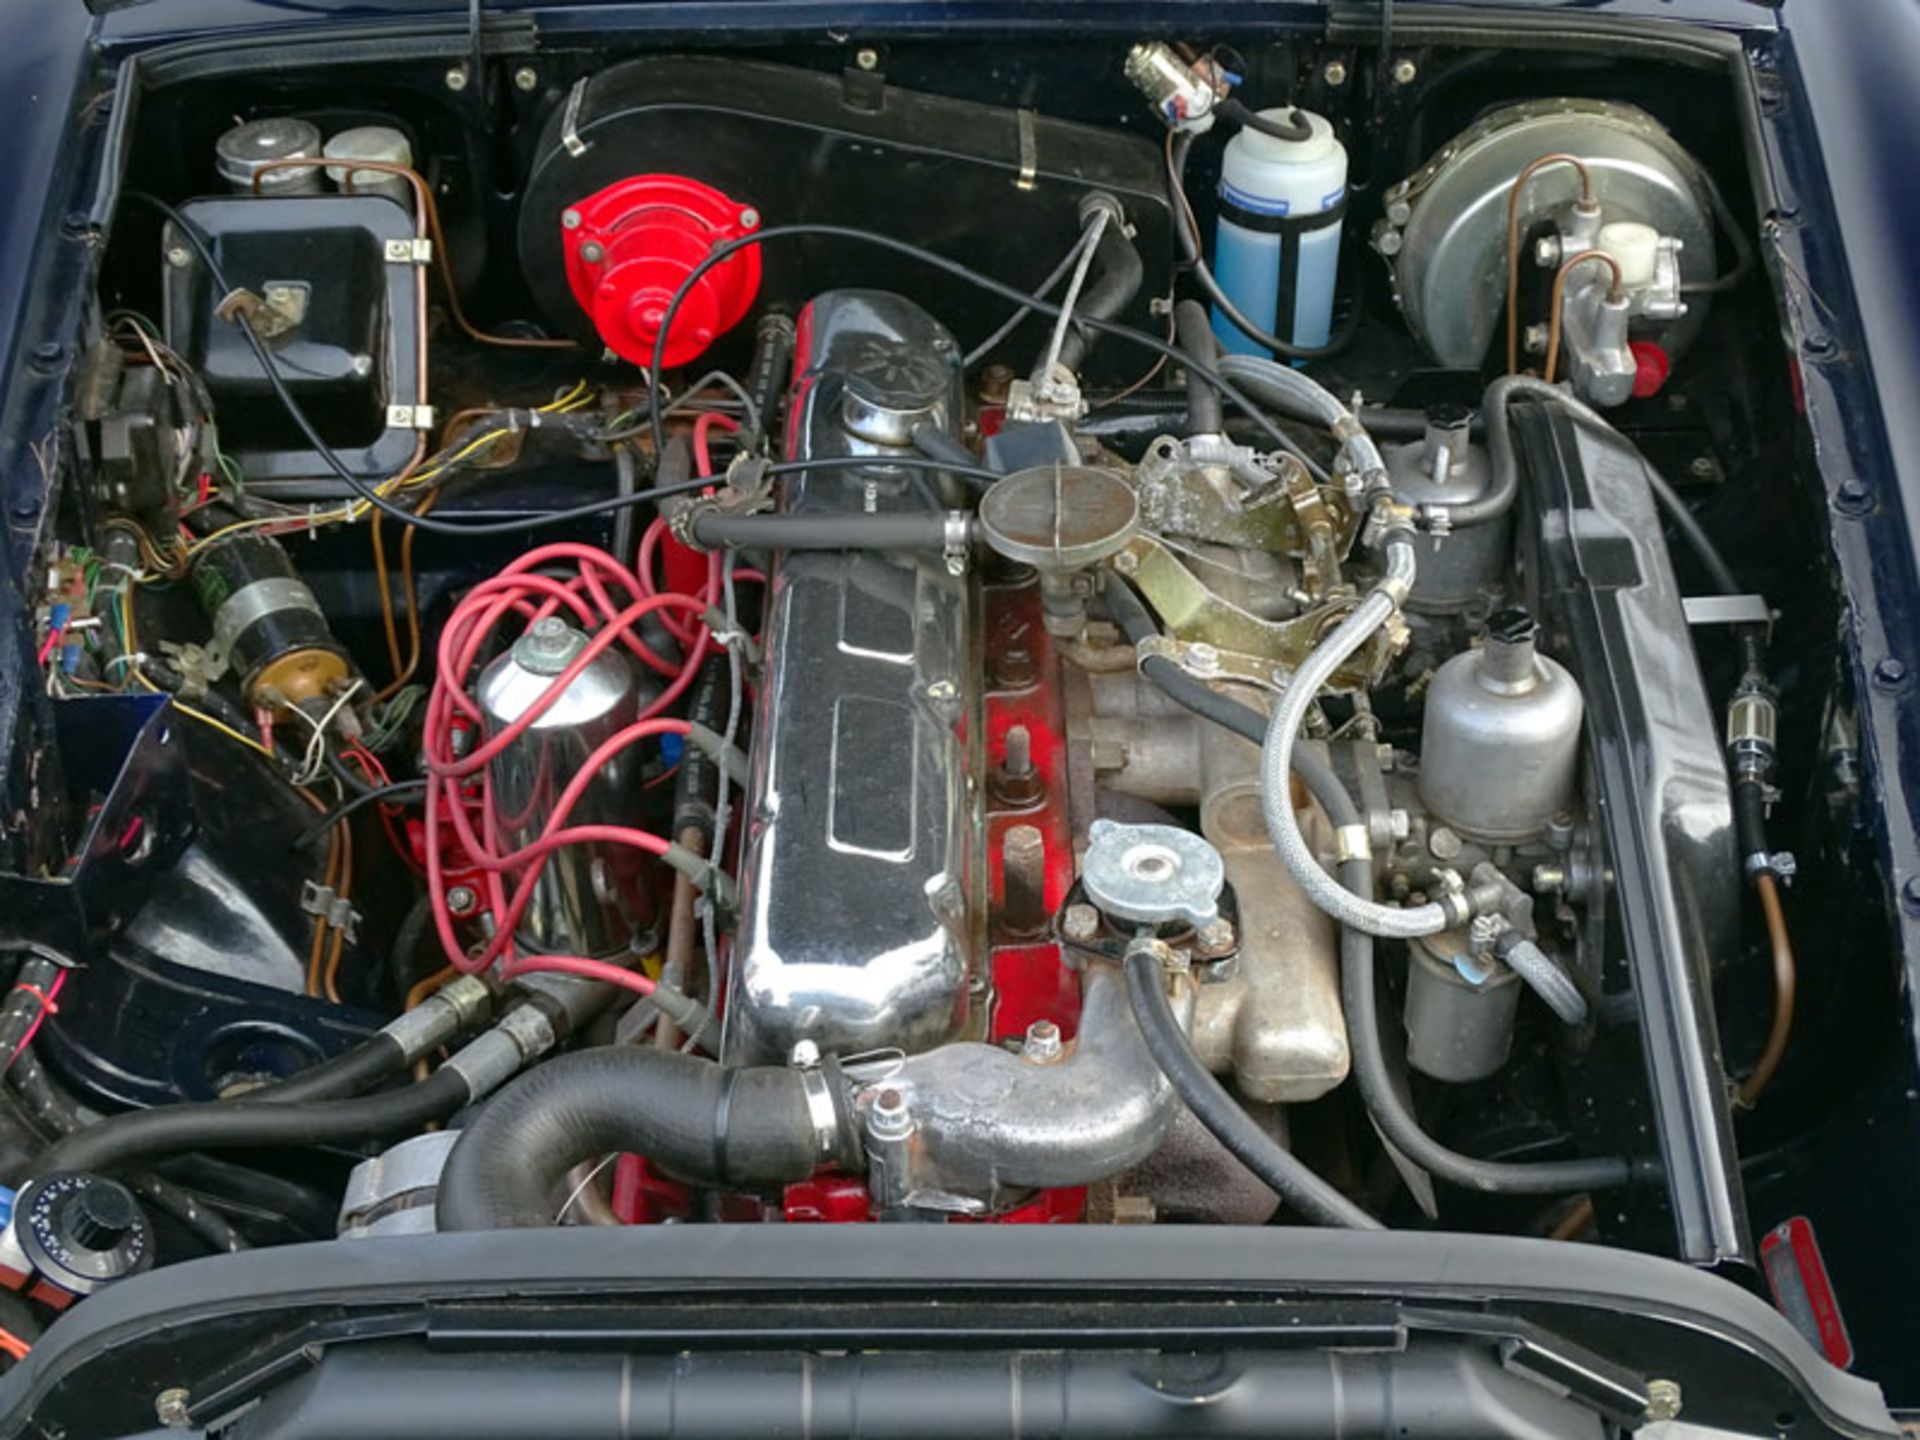 1968 MG C Roadster - Image 6 of 6